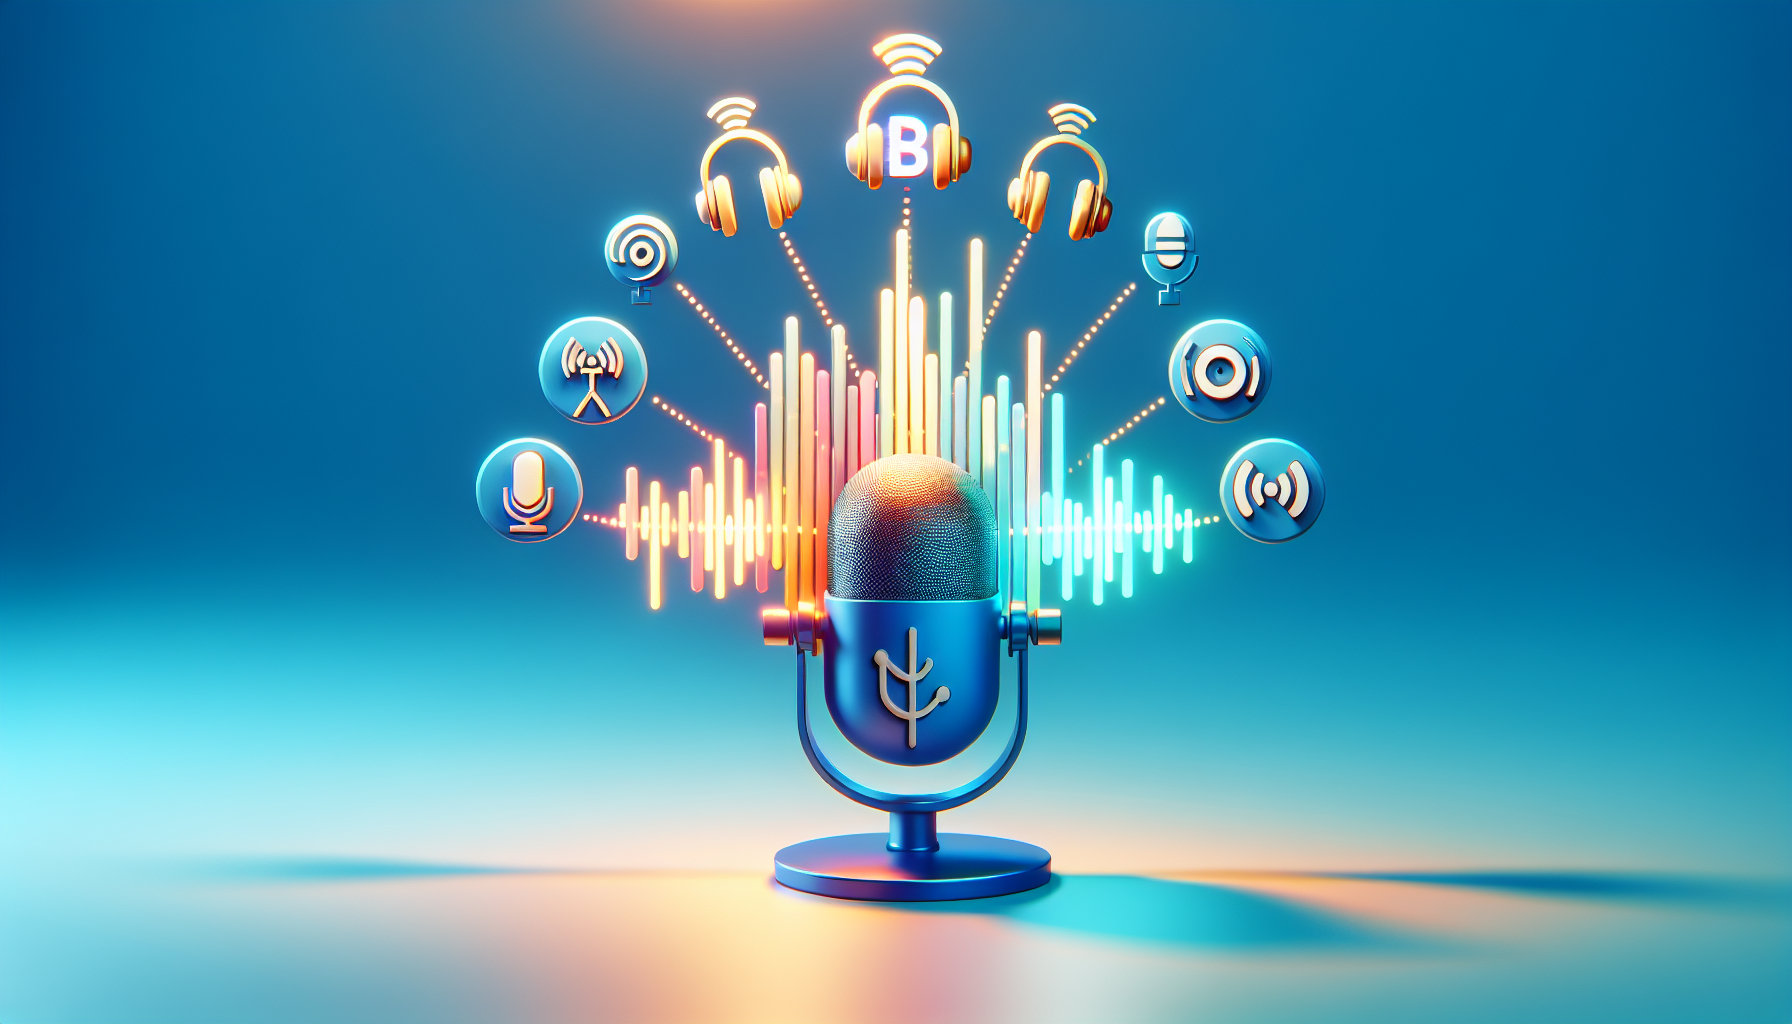 Podcast distribution to major listening platforms